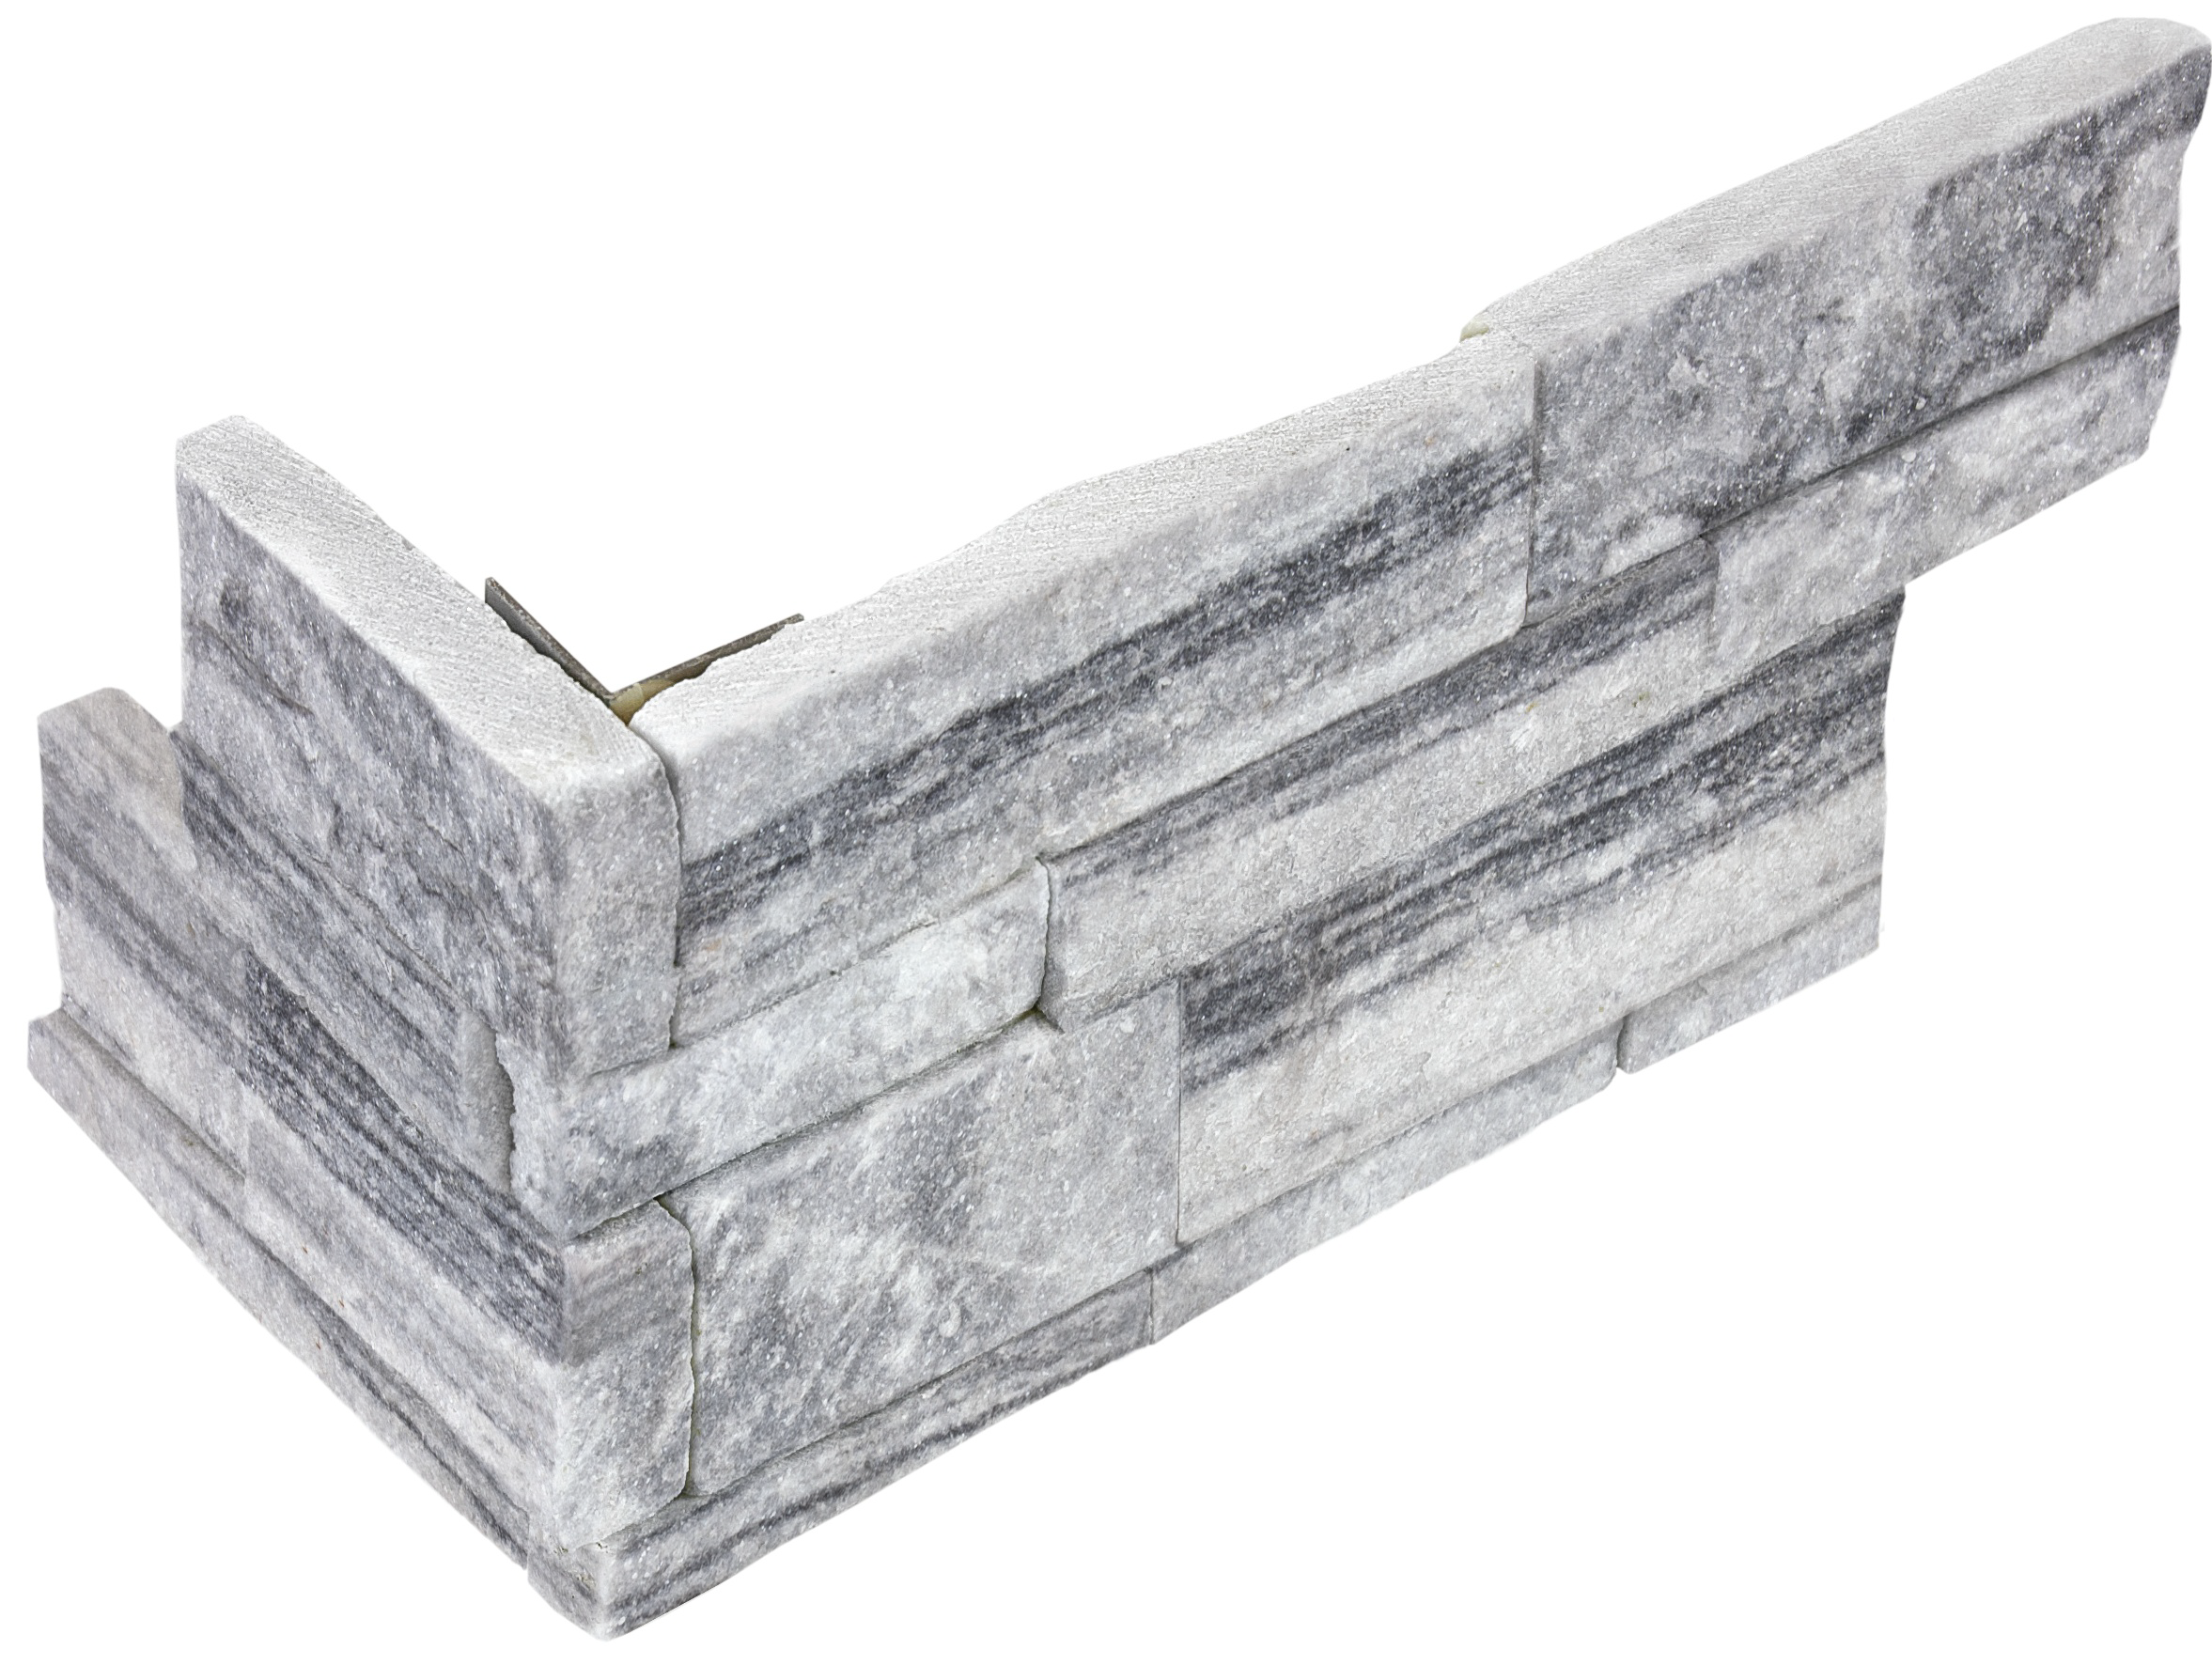 quartzite nordic crystal pattern natural stone corner shelf molding from ledger stone anatolia collection distributed by surface group international split face finish straight edge edge 6x18 bar shape